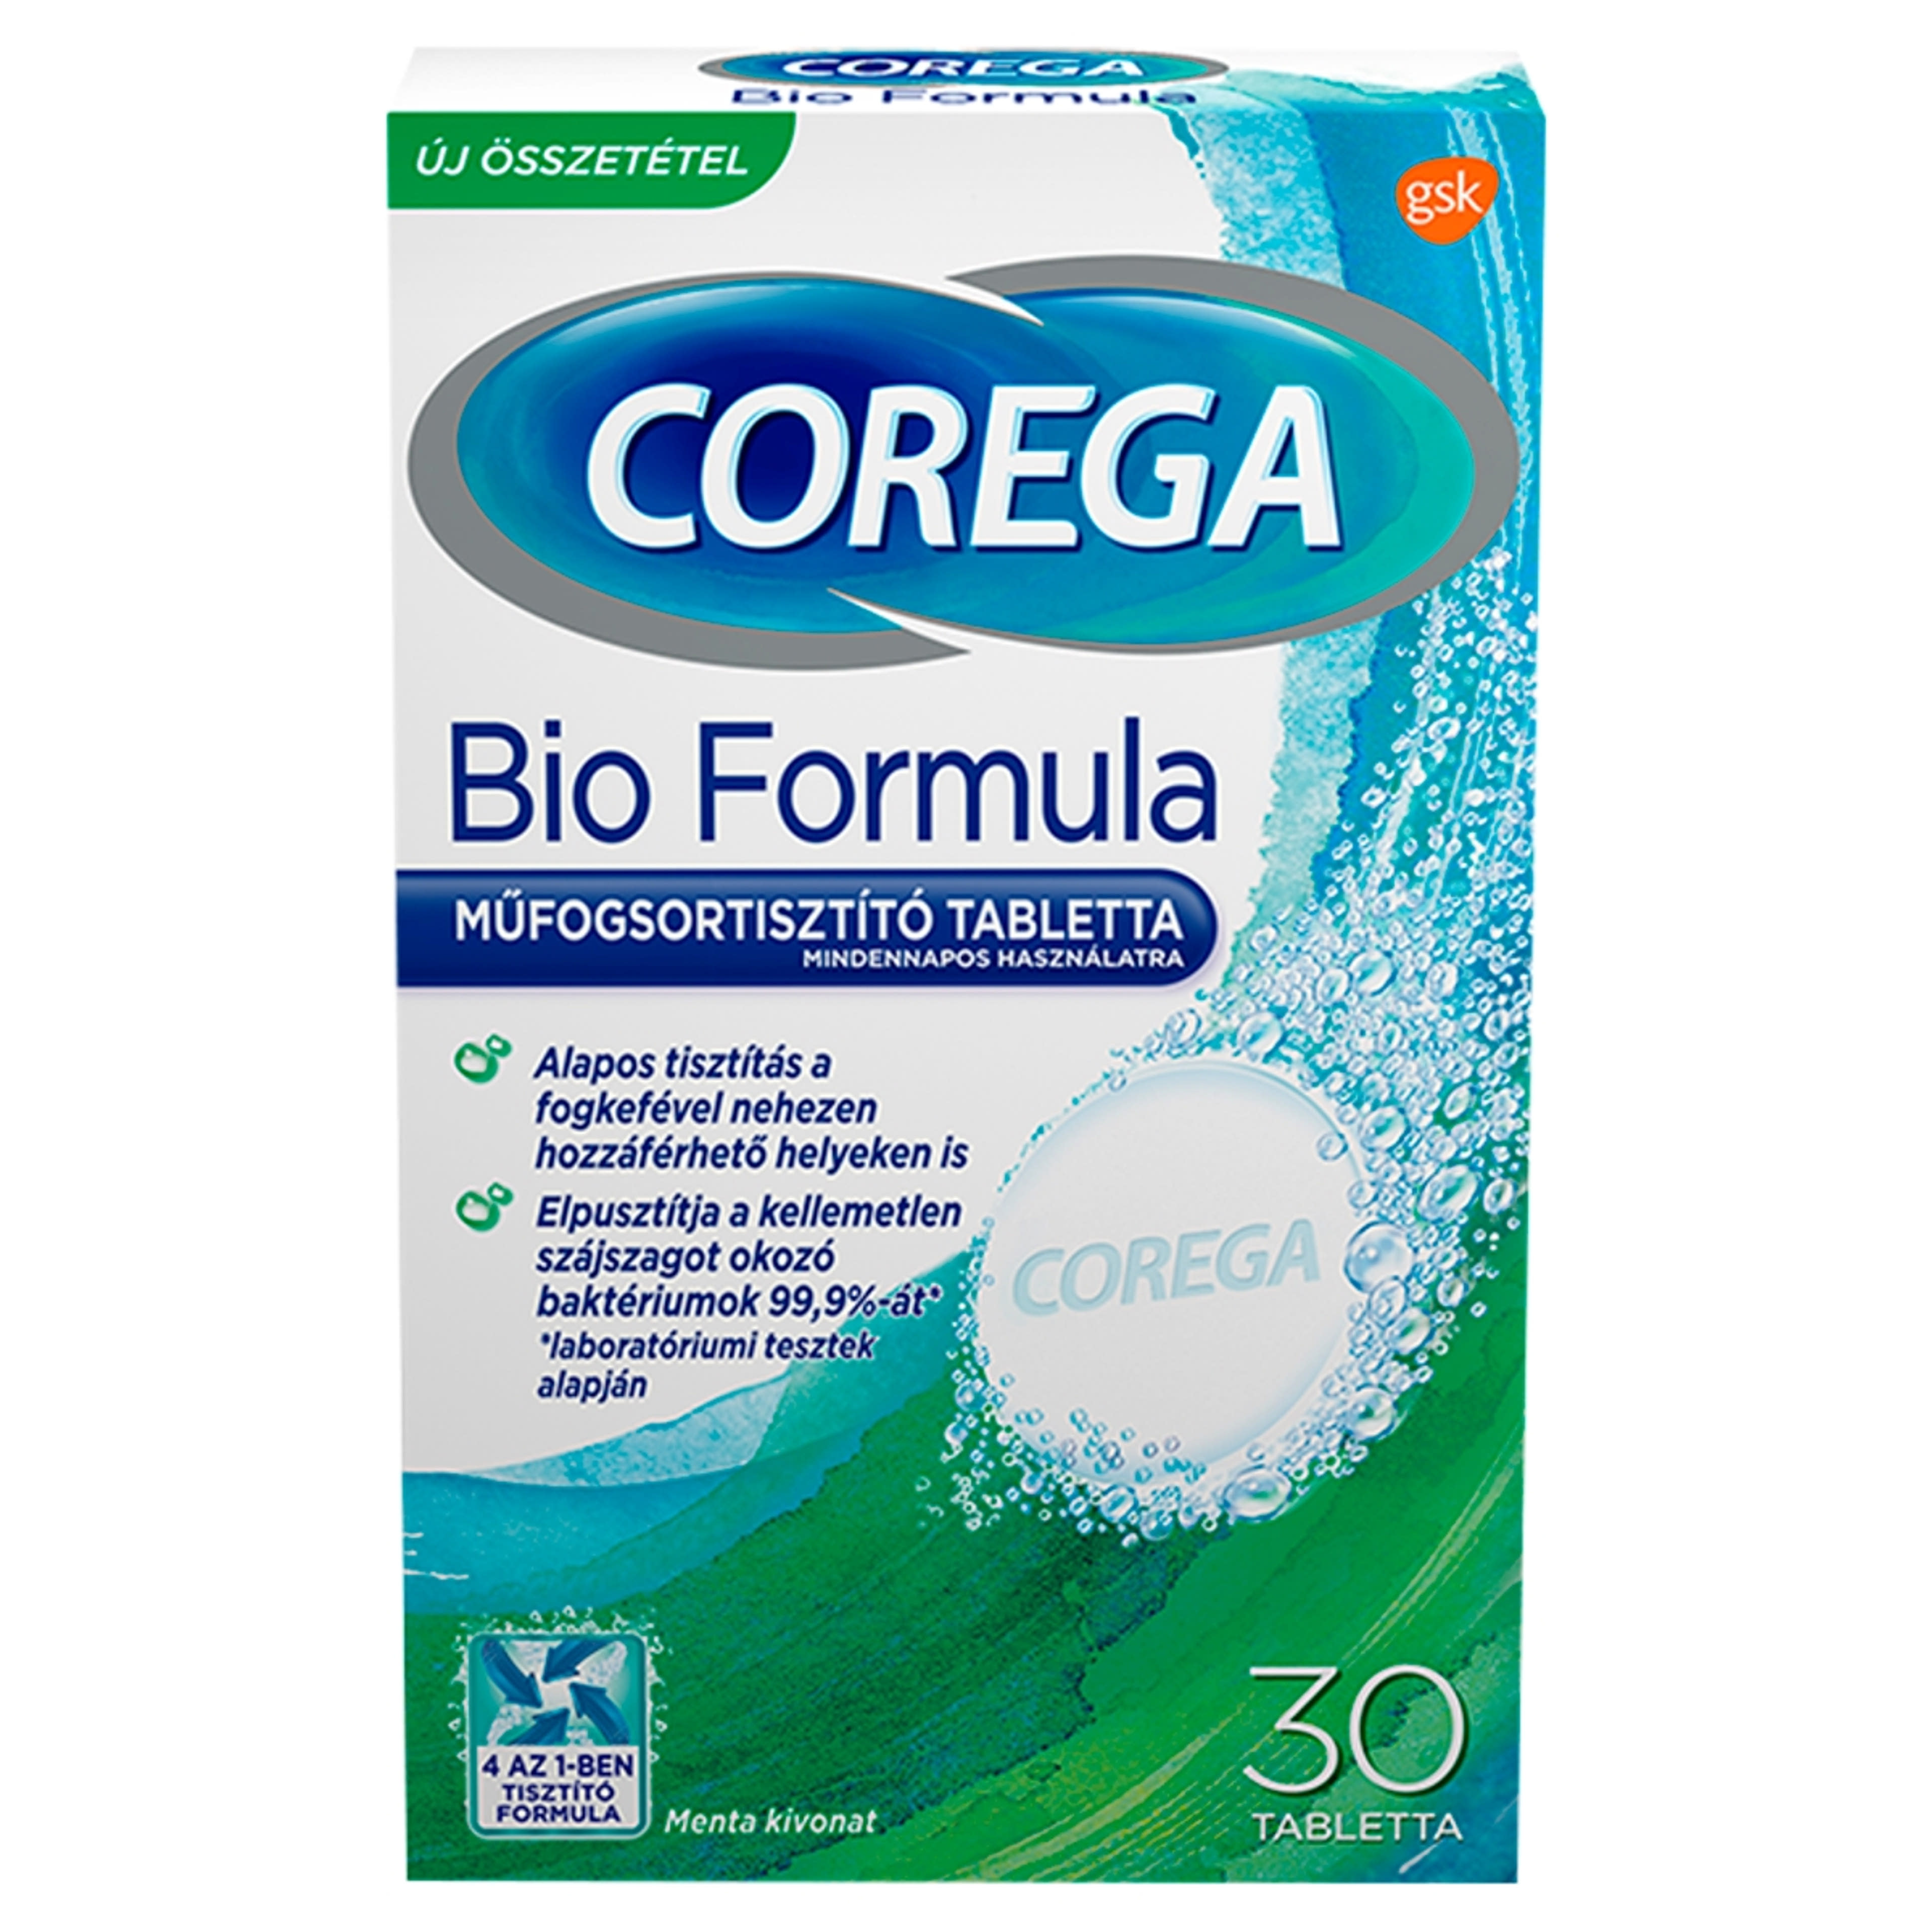 Corega Tabs Bio Formula műfogsor tisztító tabletta - 30 db-1